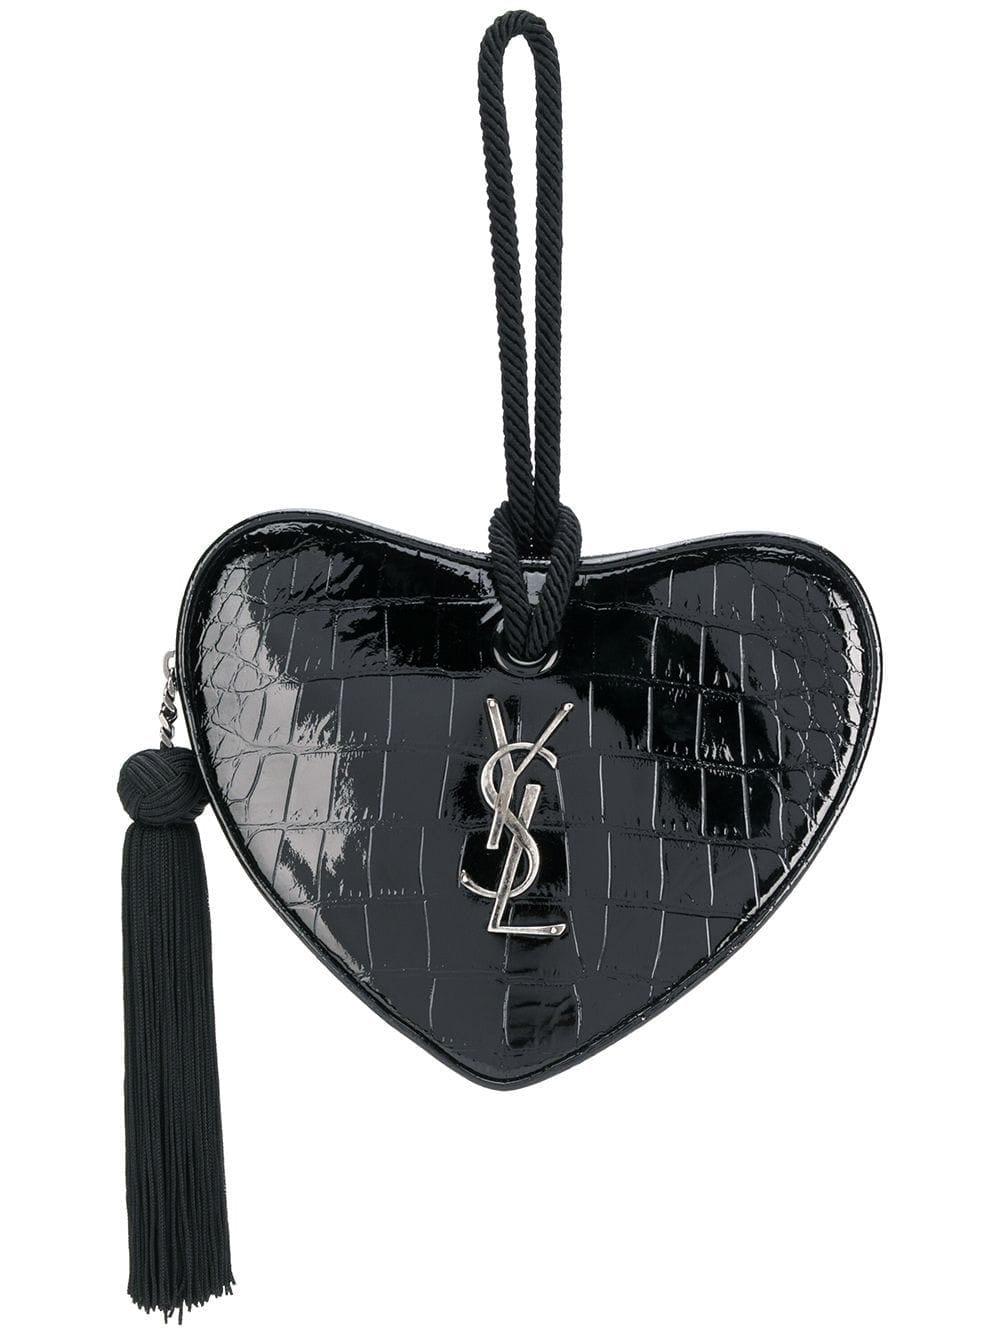 Saint Laurent Sac Coeur Monogram Heart Chain Bag in Blanc Vintage & Black